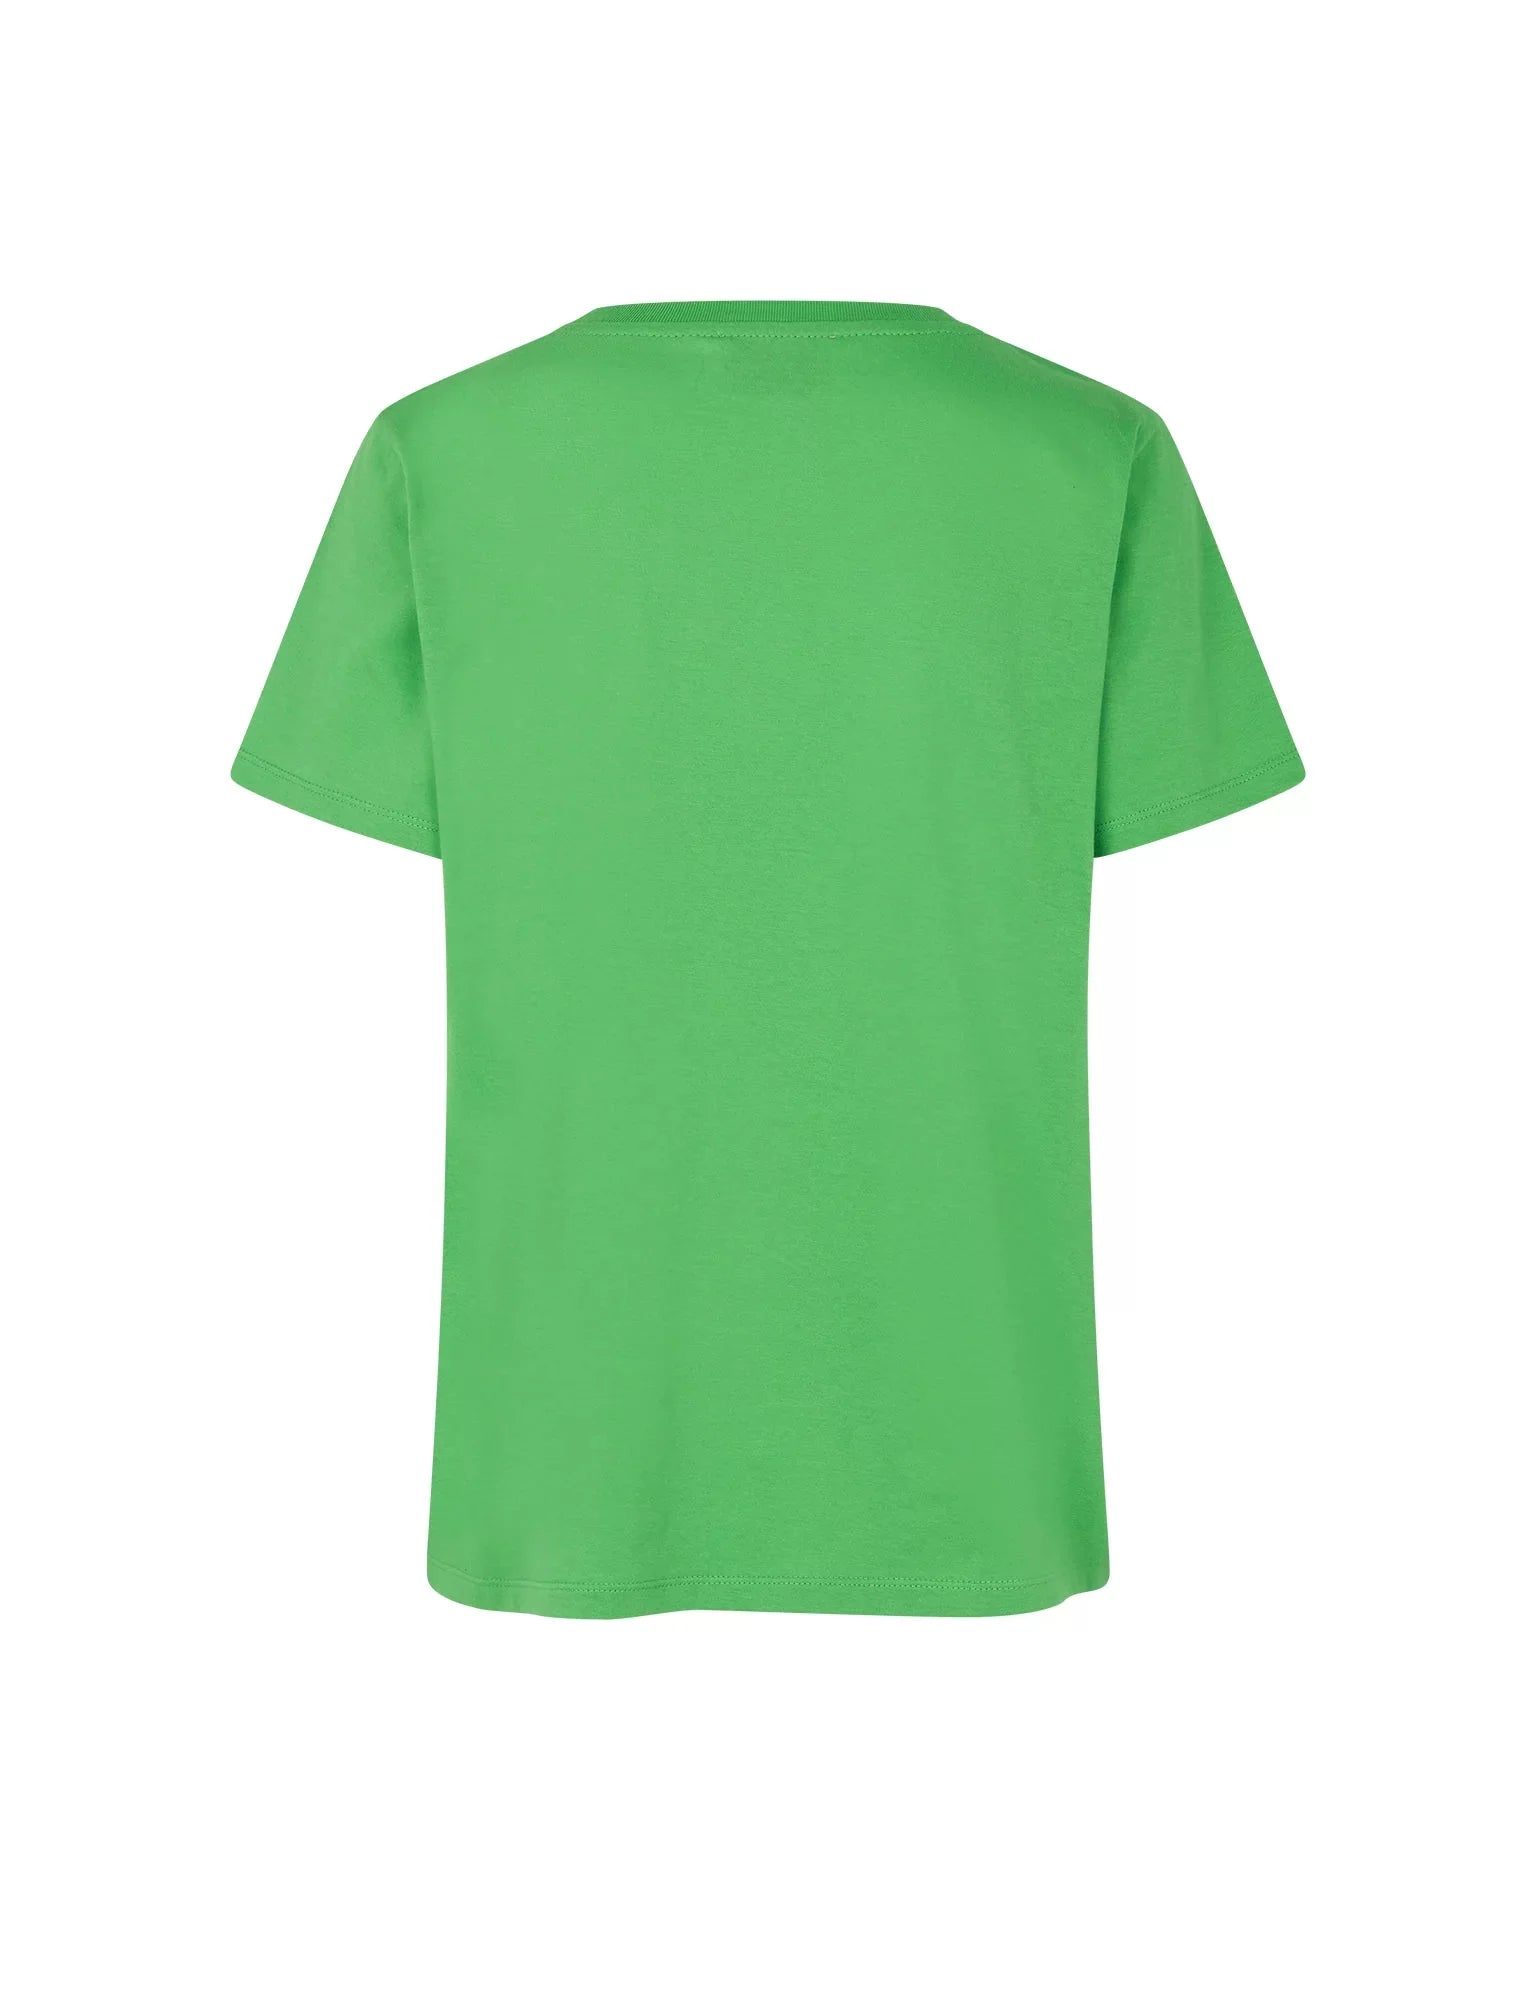 Mads Nørgaard - Single Organic Trenda T-skjorte, grønn by Mads Nørgaard | stylebykul